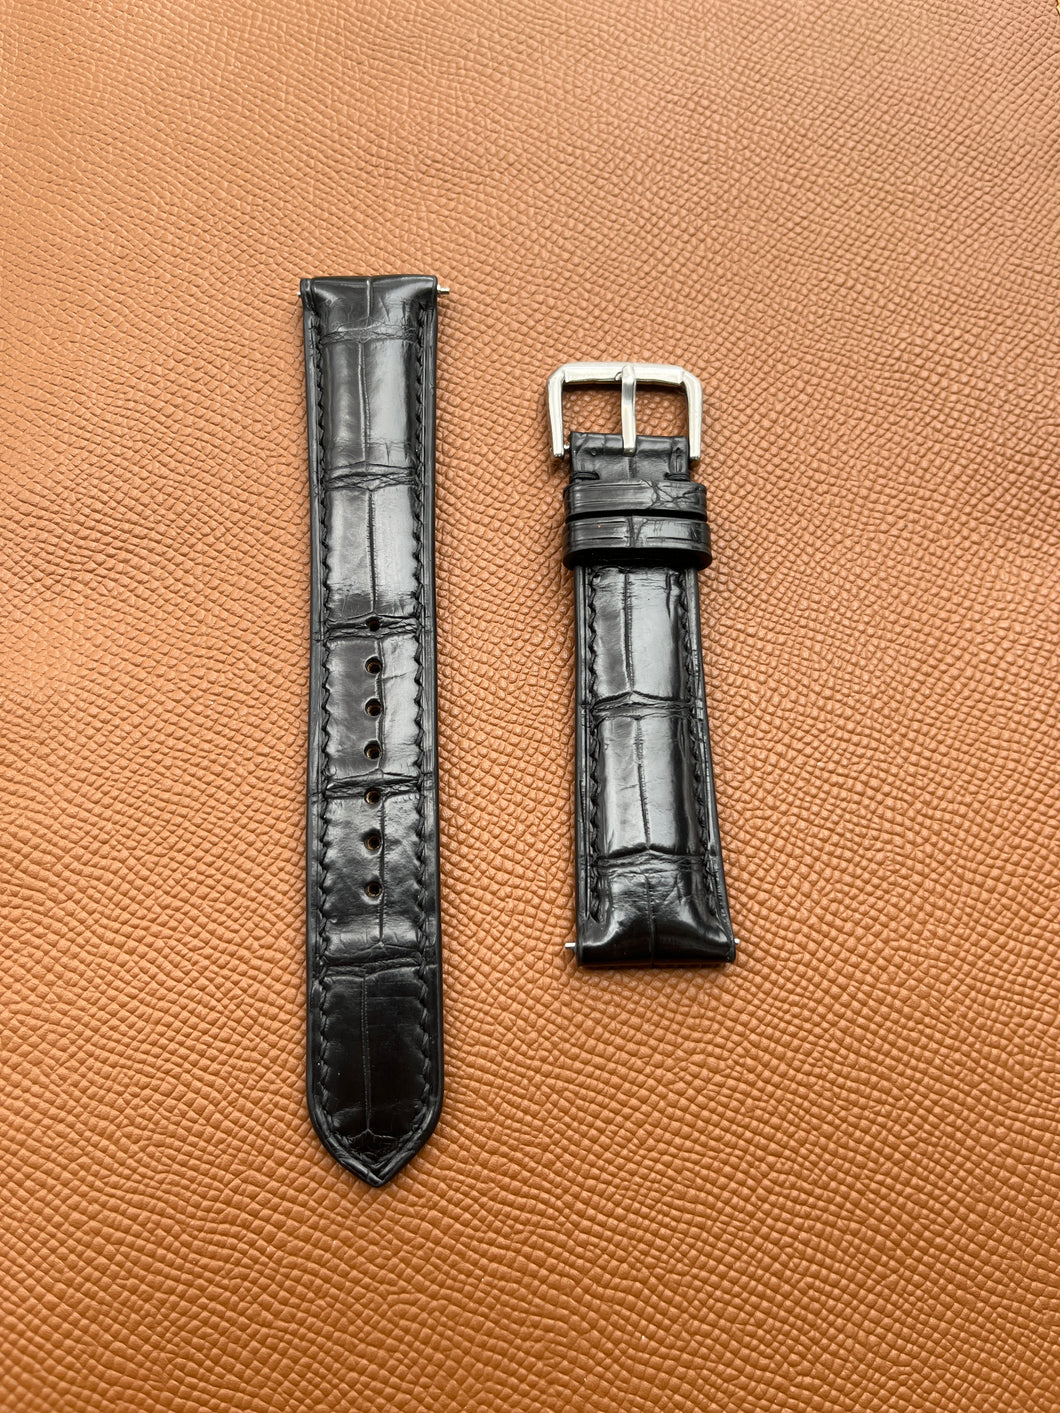 Crocodile Leather Straps - Black/17mm - 20mm